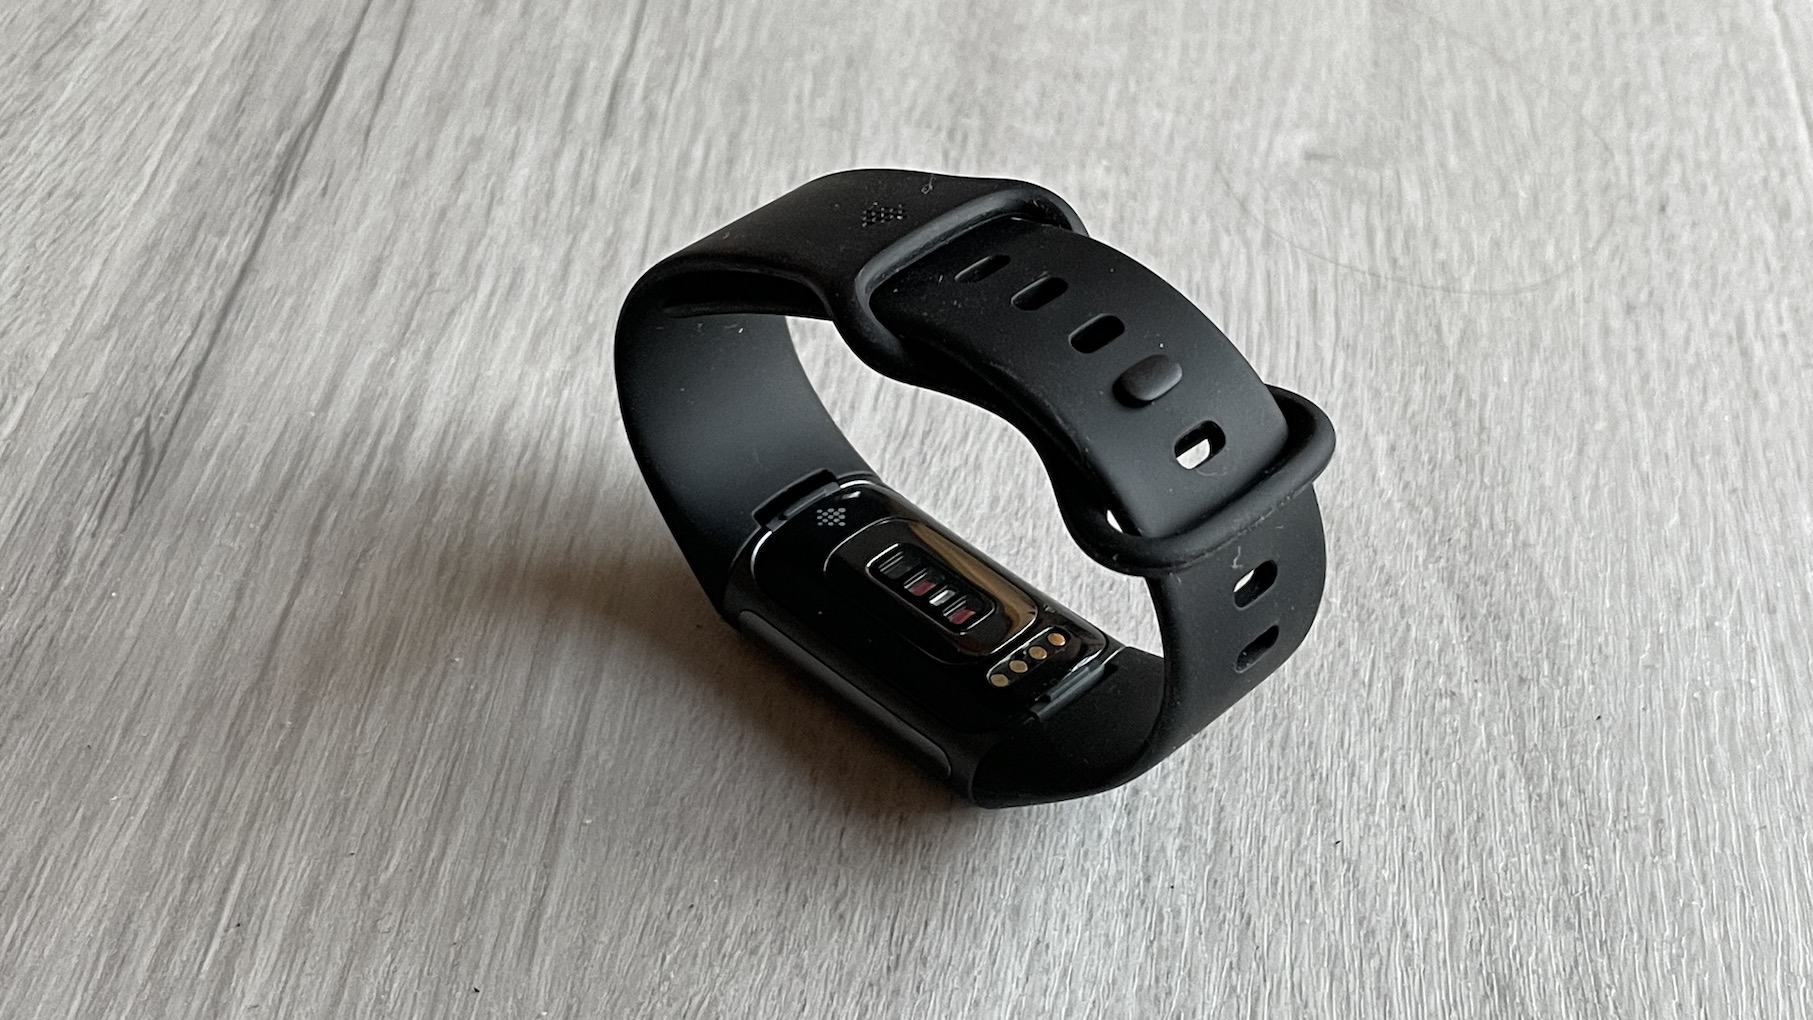 Fitbit Charge 5智能手表回顾。健身追踪器的许多健康功能，终于有了 